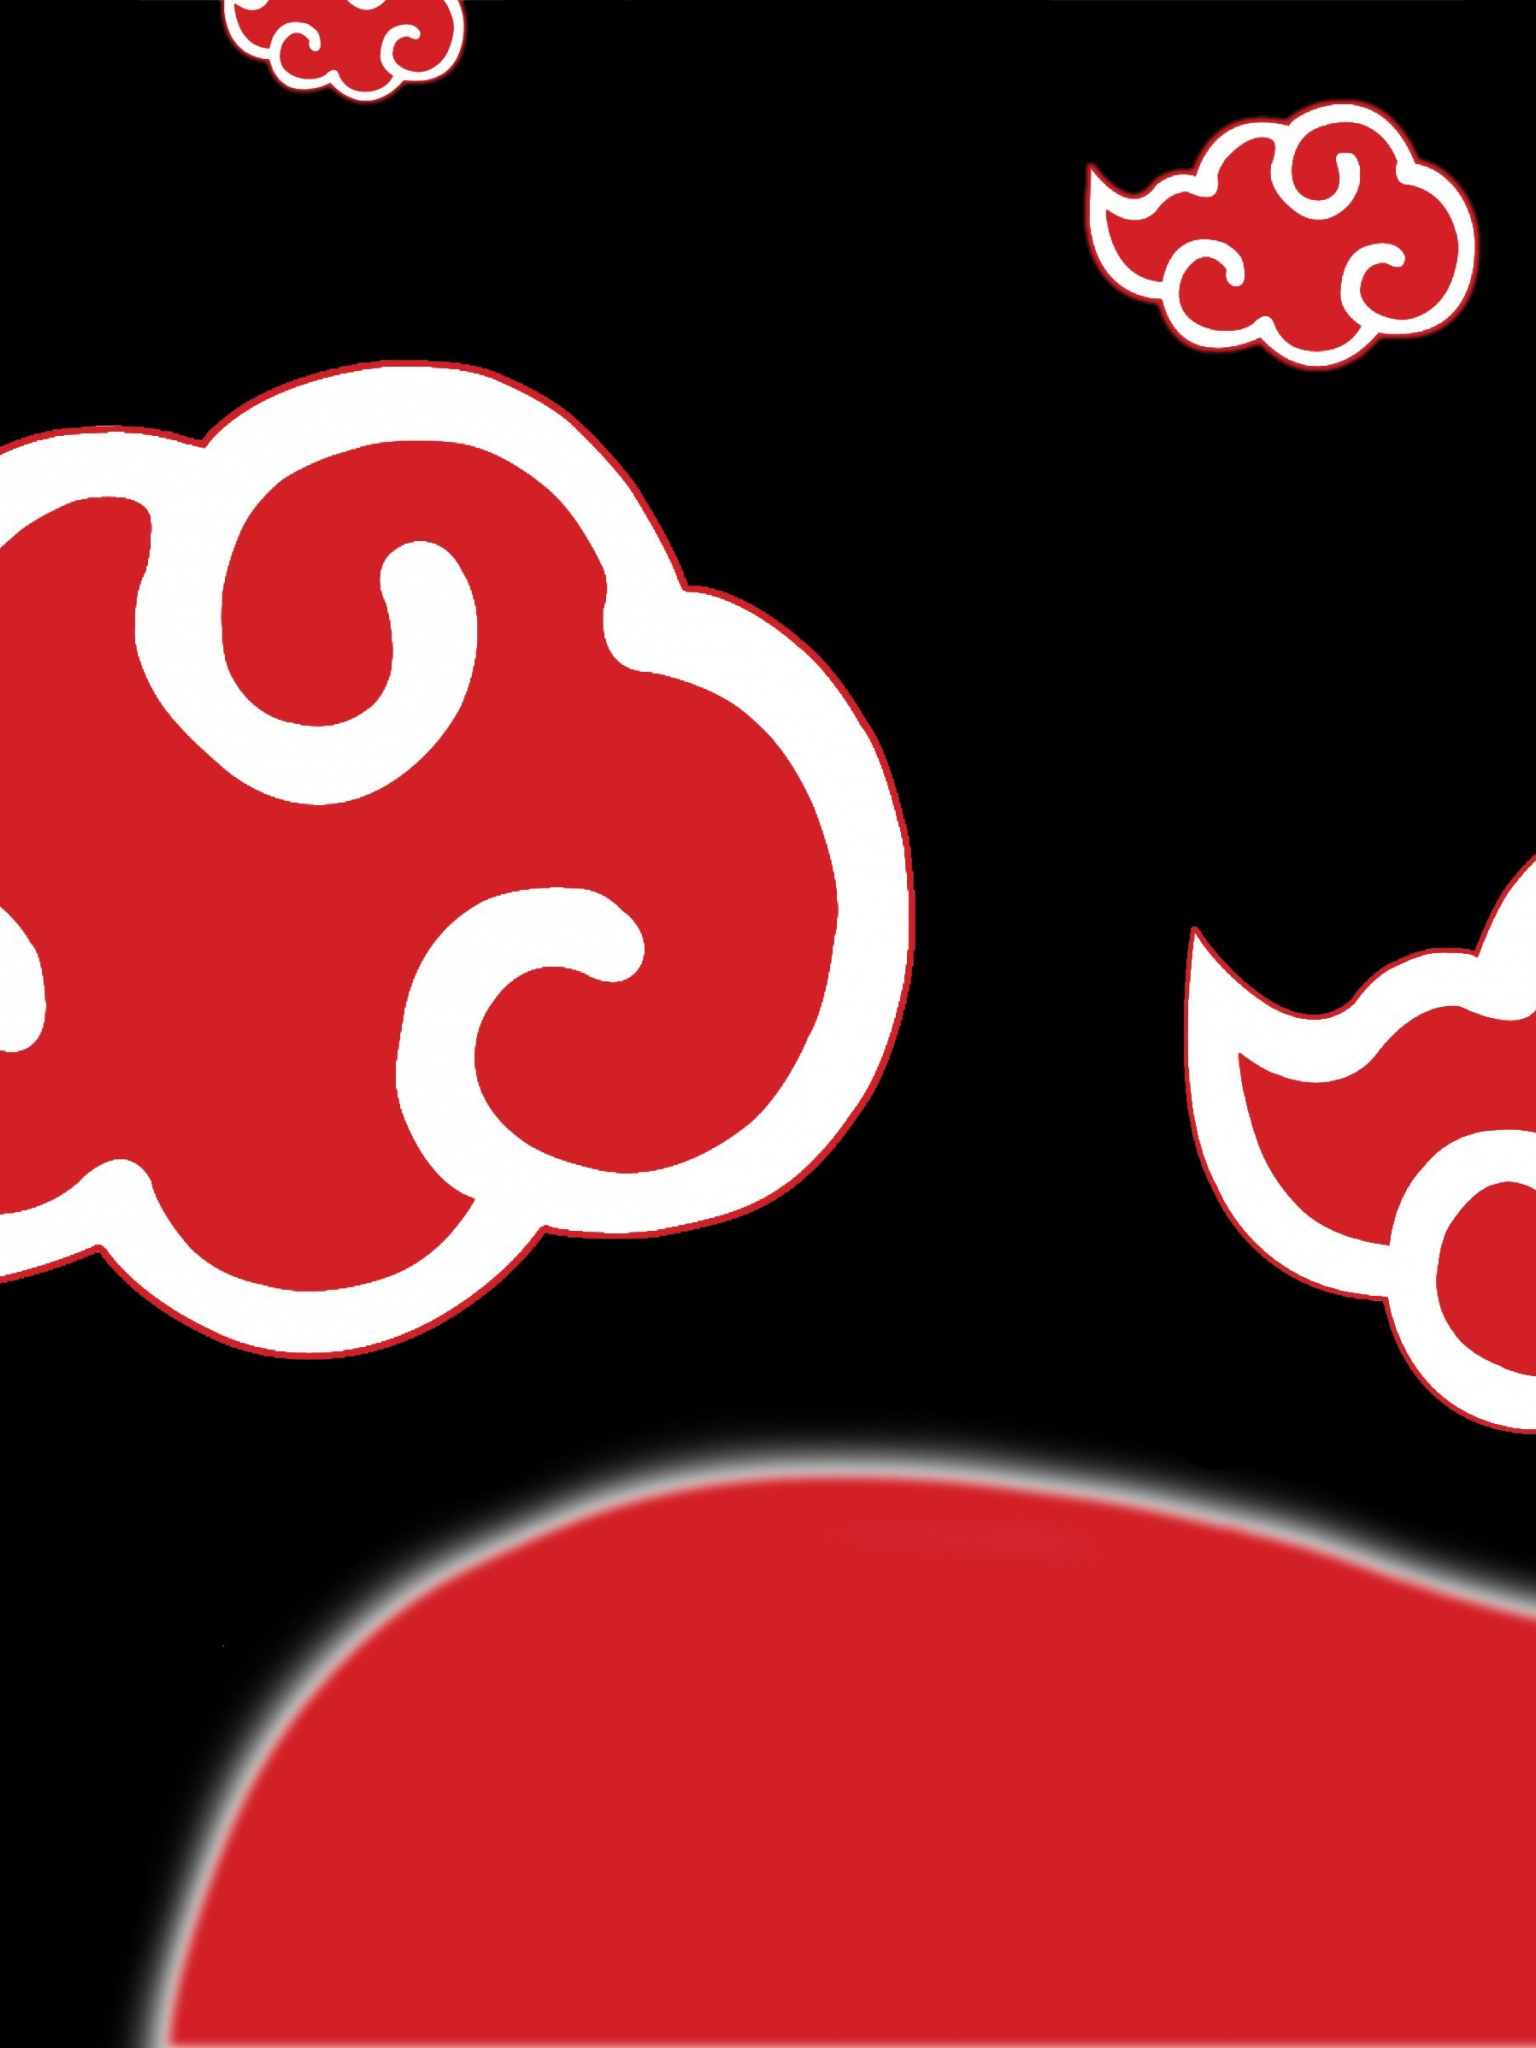 Free download Clouds Naruto Shippuden Akatsuki wallpaper 4300x2396 258769 [4300x2396] for your Desktop, Mobile & Tablet. Explore Akatsuki Wallpaper iPhone. Cool Naruto Wallpaper Hd, Naruto Akatsuki Wallpaper, Akatsuki Wallpaper HD